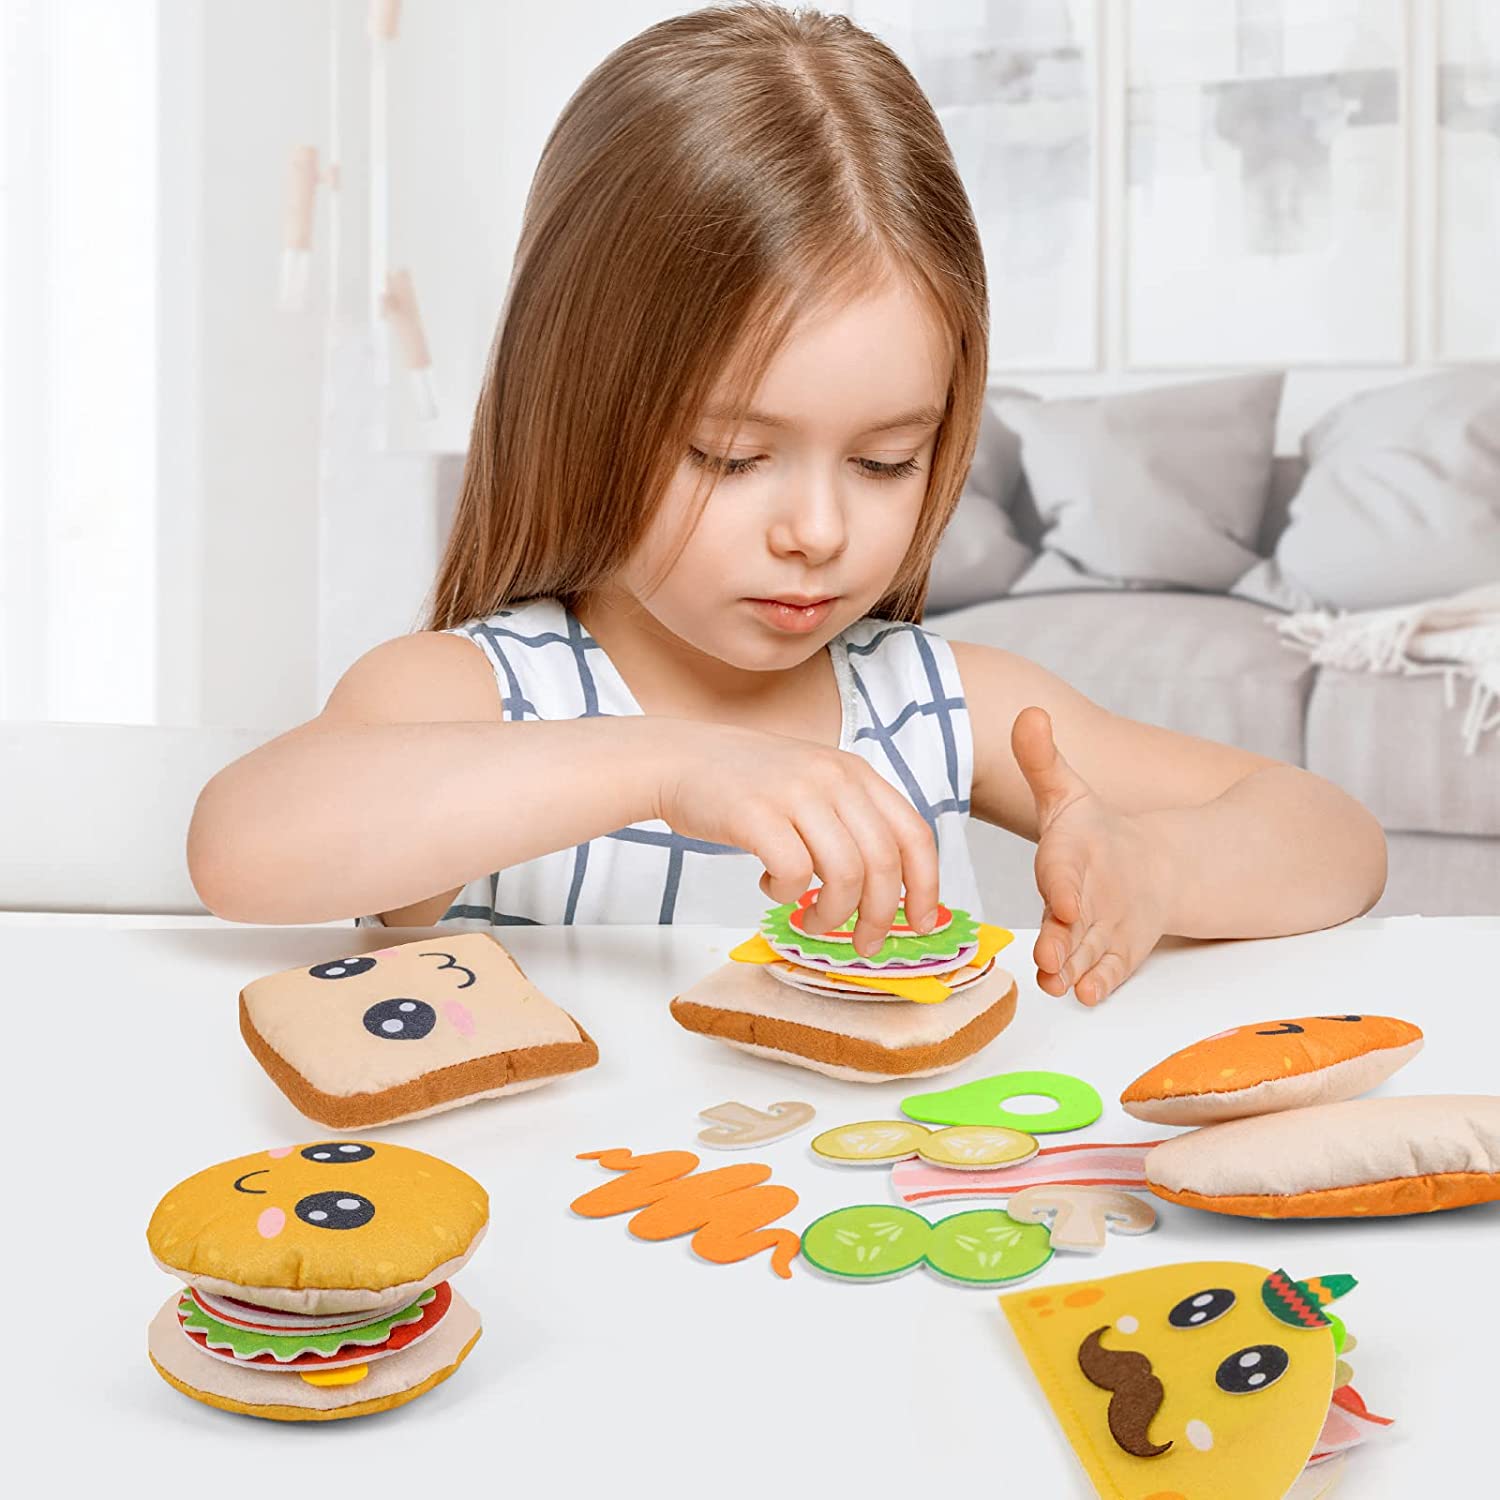 D-fantix kids play kitchen accessories set, 24 pcs toddlers tin pots a